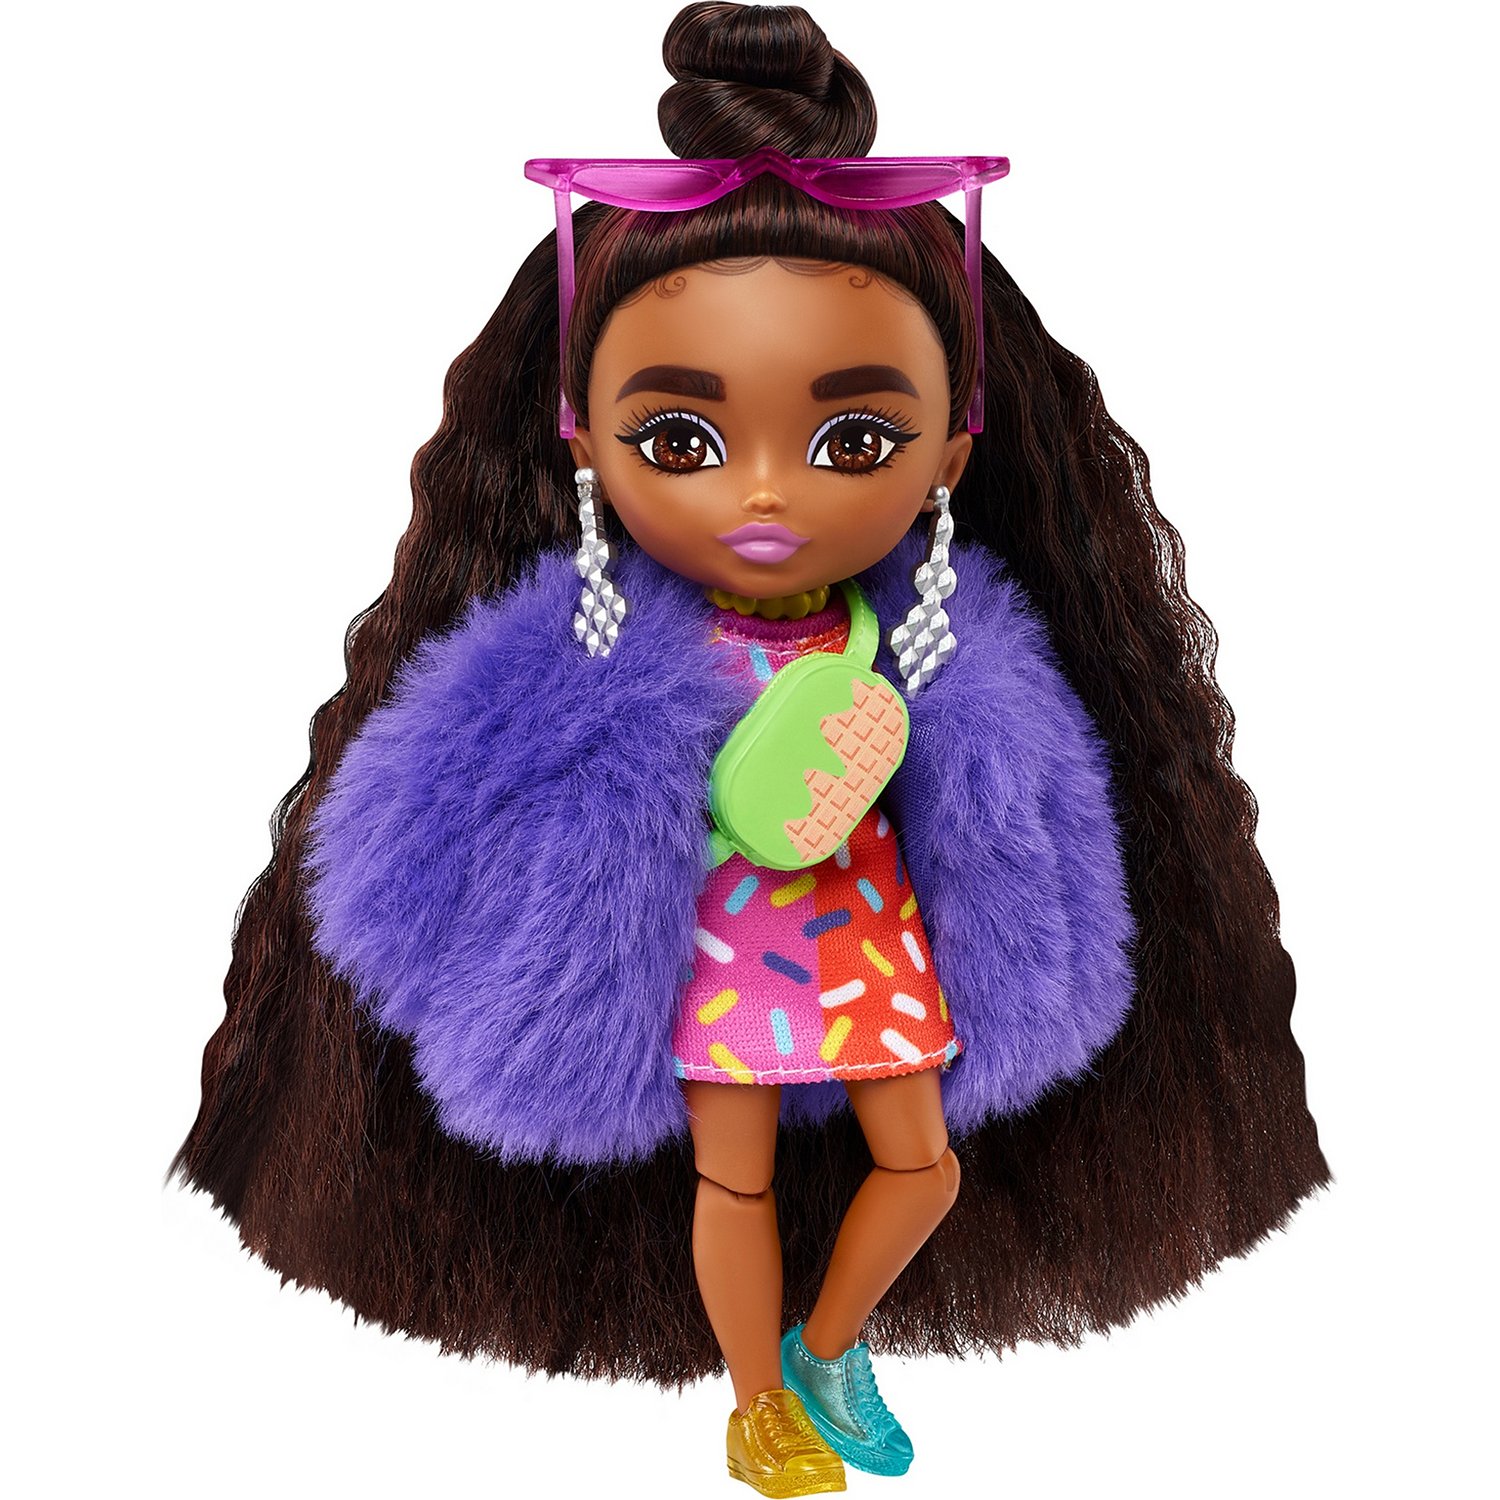 Мини-кукла Barbie Extra Minis с каштановыми волосами HGP62/HGP63 кукла barbie barbiestyle 4 стильная с каштановыми волосами